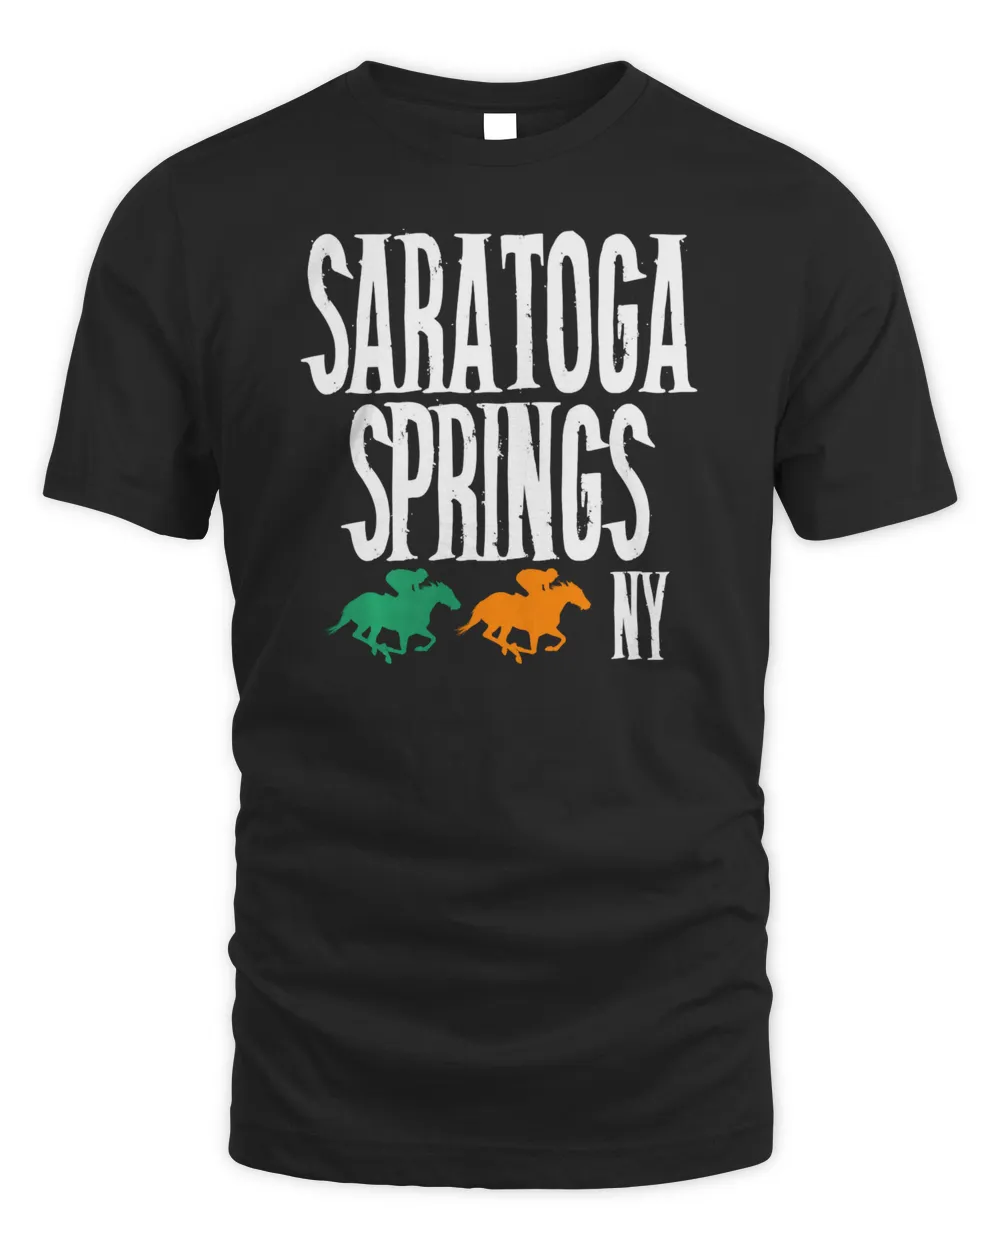 Saratoga Springs New York Horse Racing Jocke